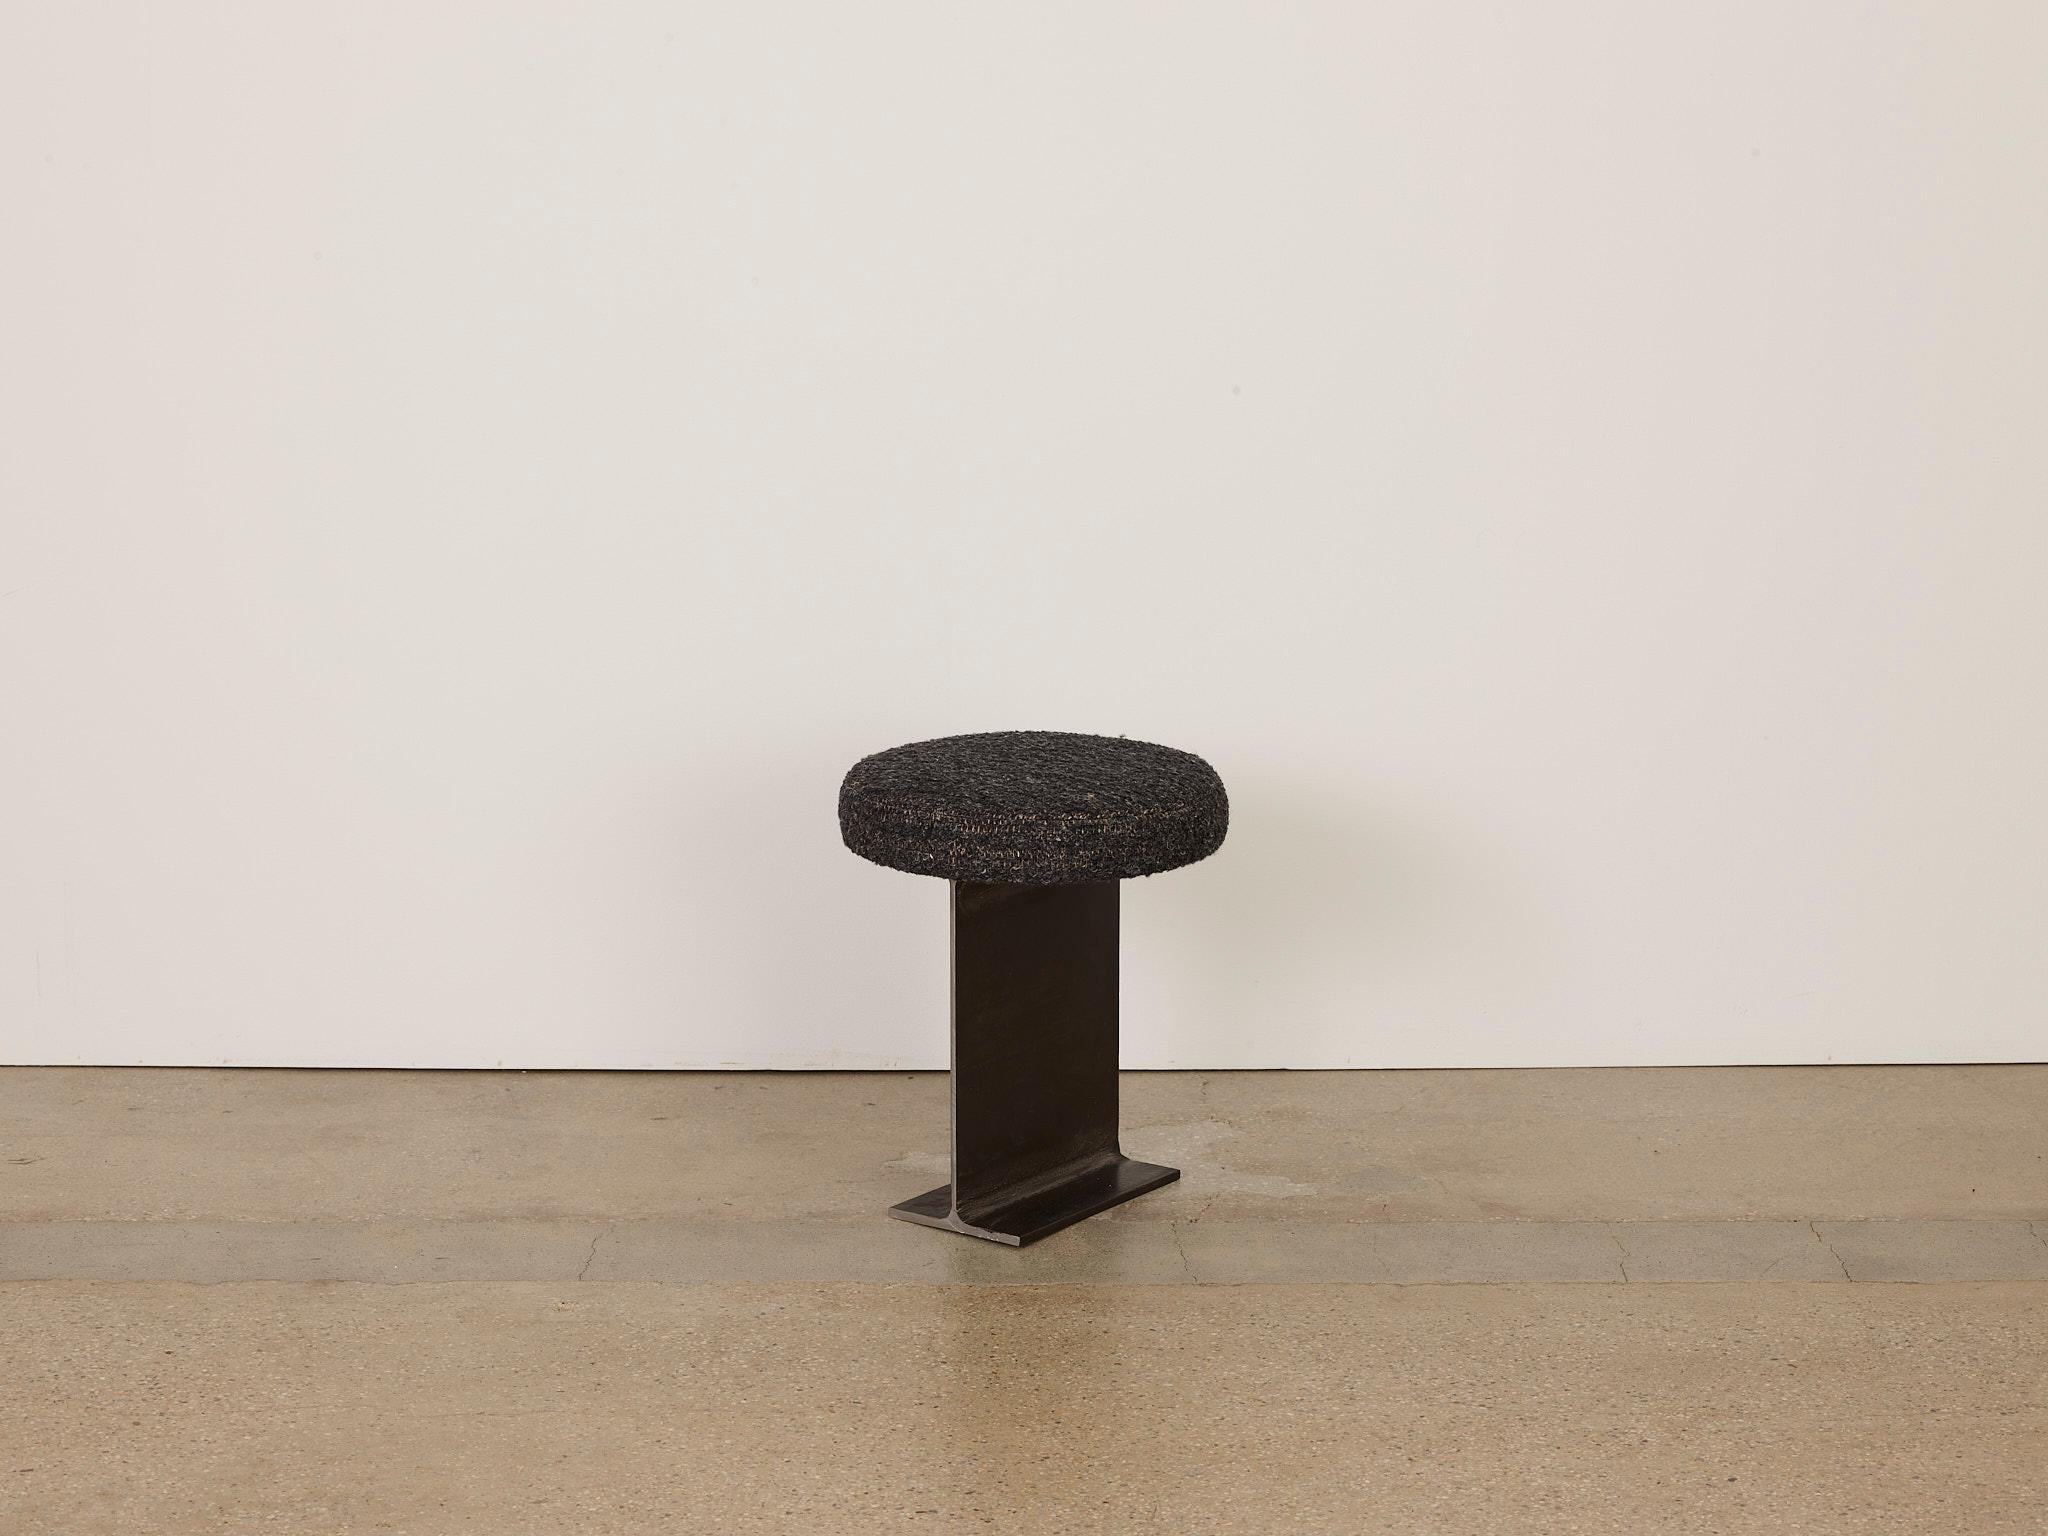 Trono pill black chair by Umberto Bellardi Ricci
Dimensions: Diameter 16